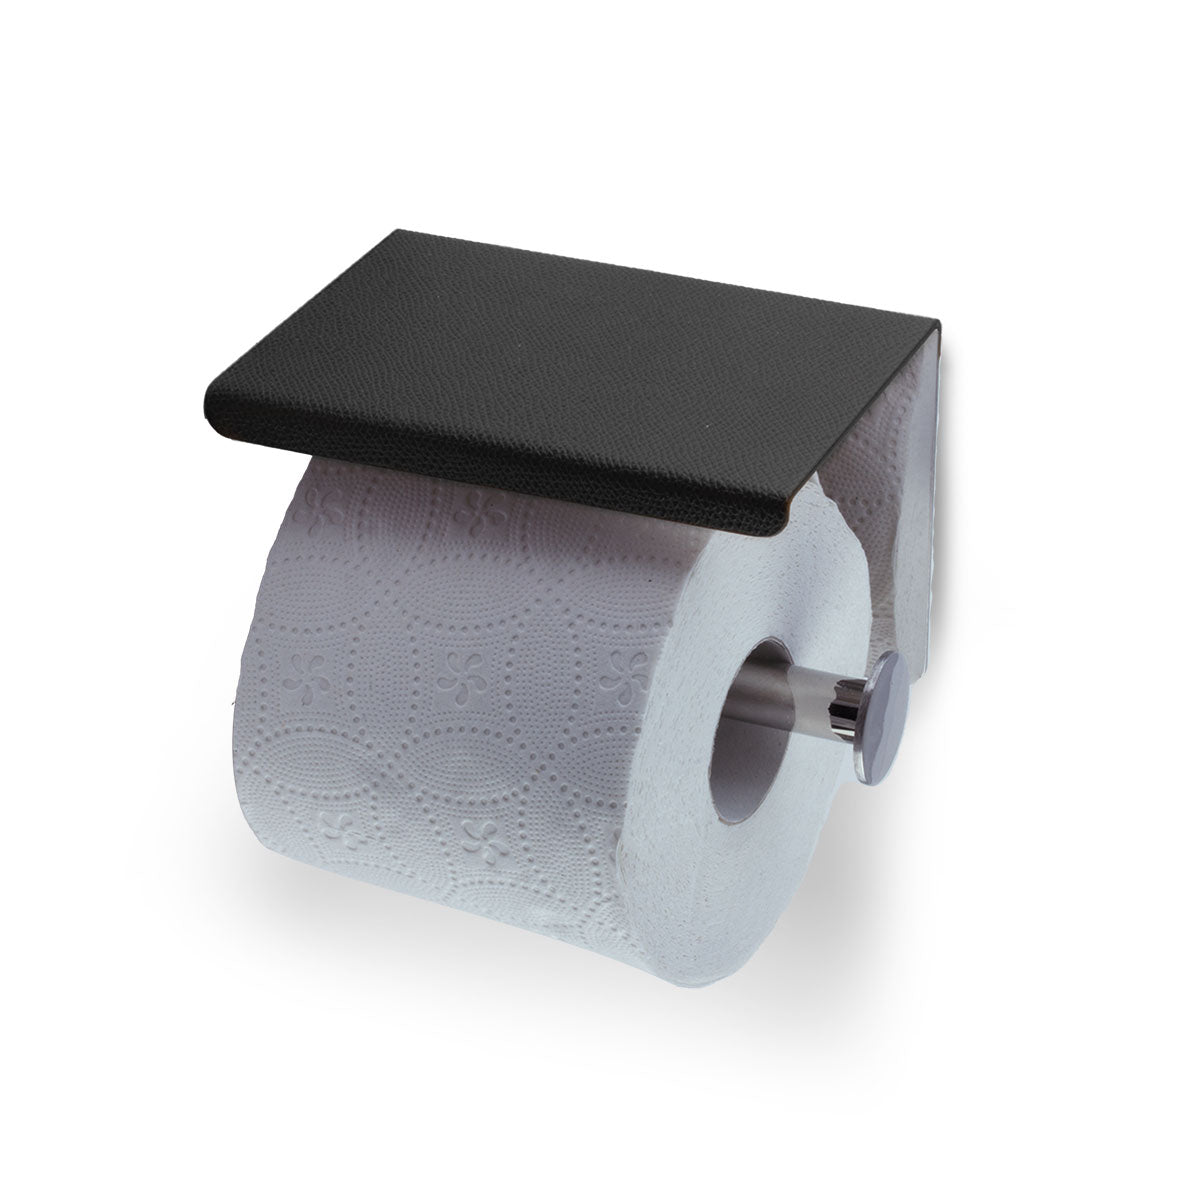 Leather toilet paper dispenser - Grained calf